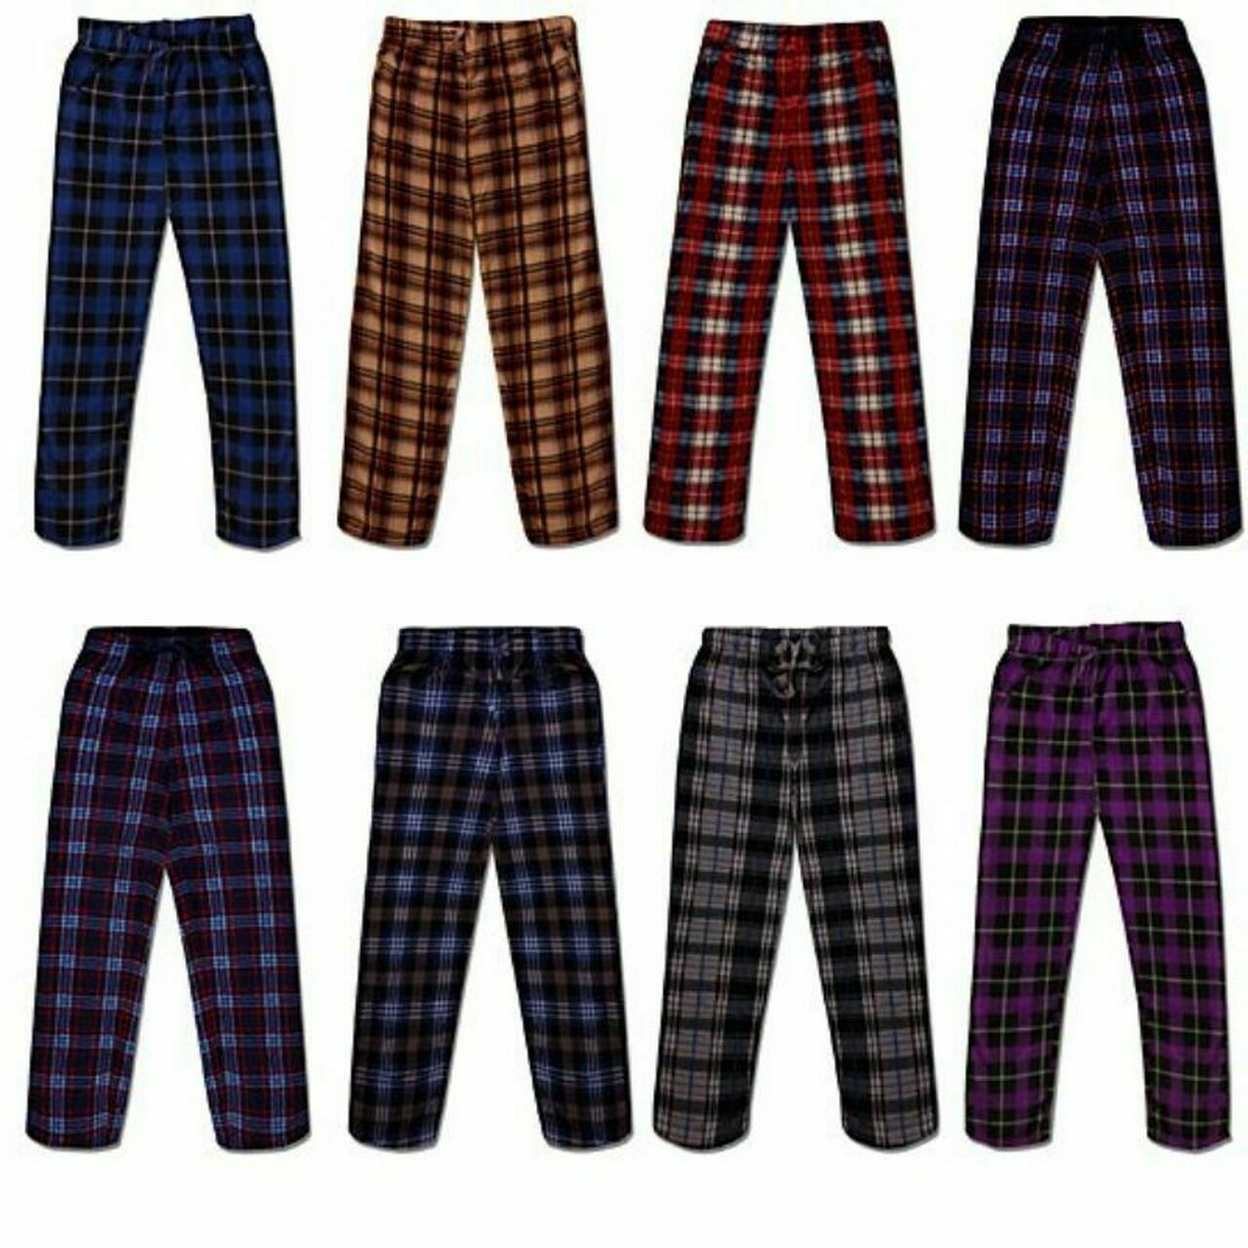 2-Pack: Men's Ultra Soft Cozy Flannel Fleece Plaid Pajama Sleep Bottom Lounge Pants - Black & Black, Small